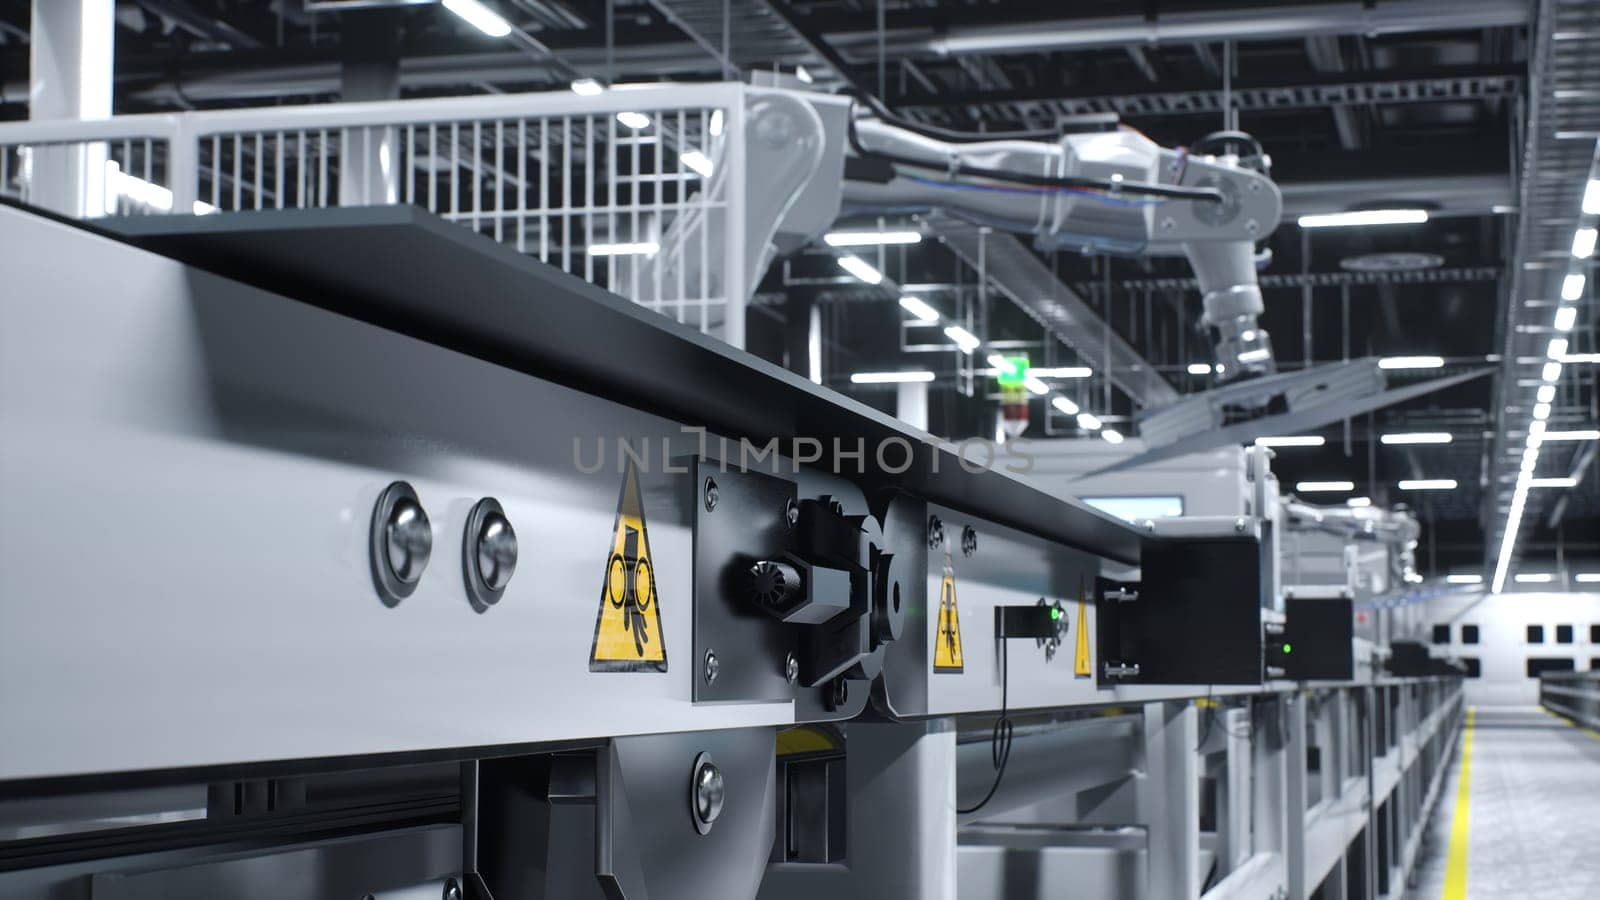 High voltage danger signs on conveyor belts in factory, 3D render by DCStudio